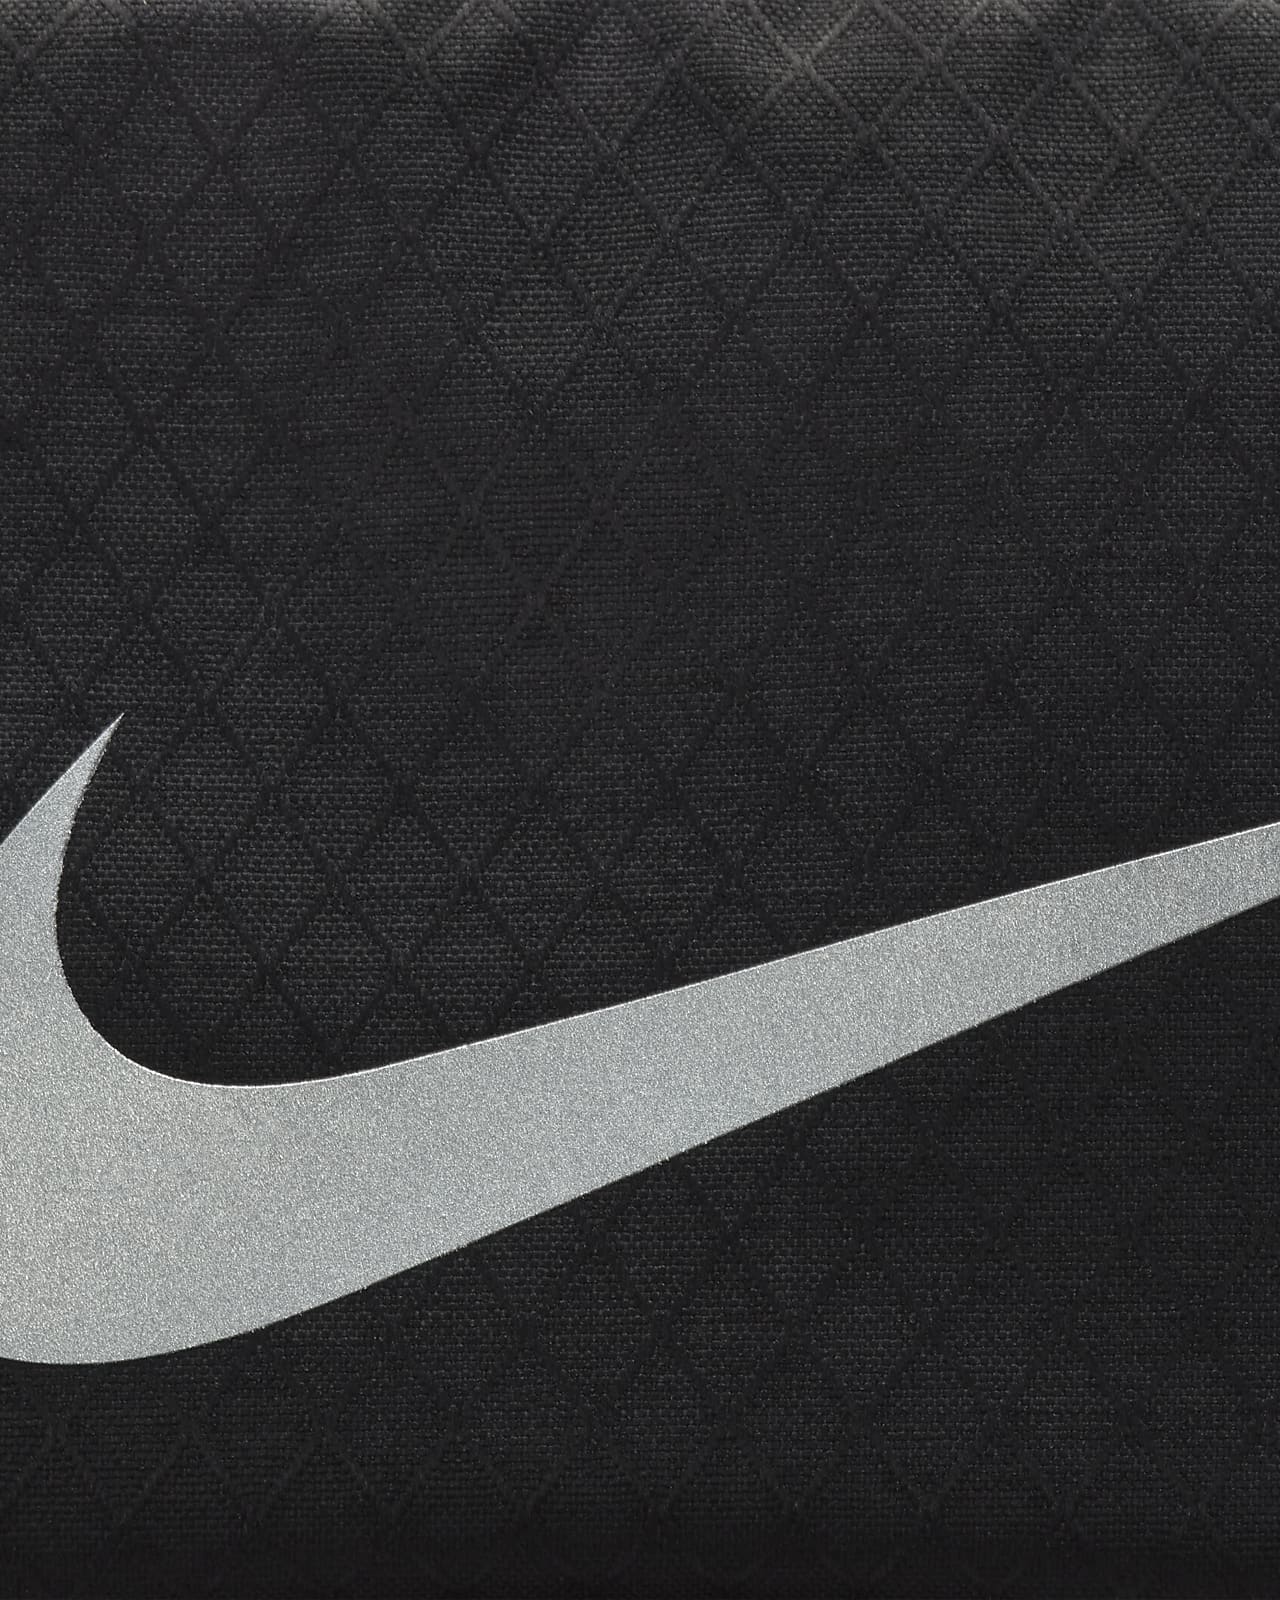 Nike Brasilia Winterized pas cher